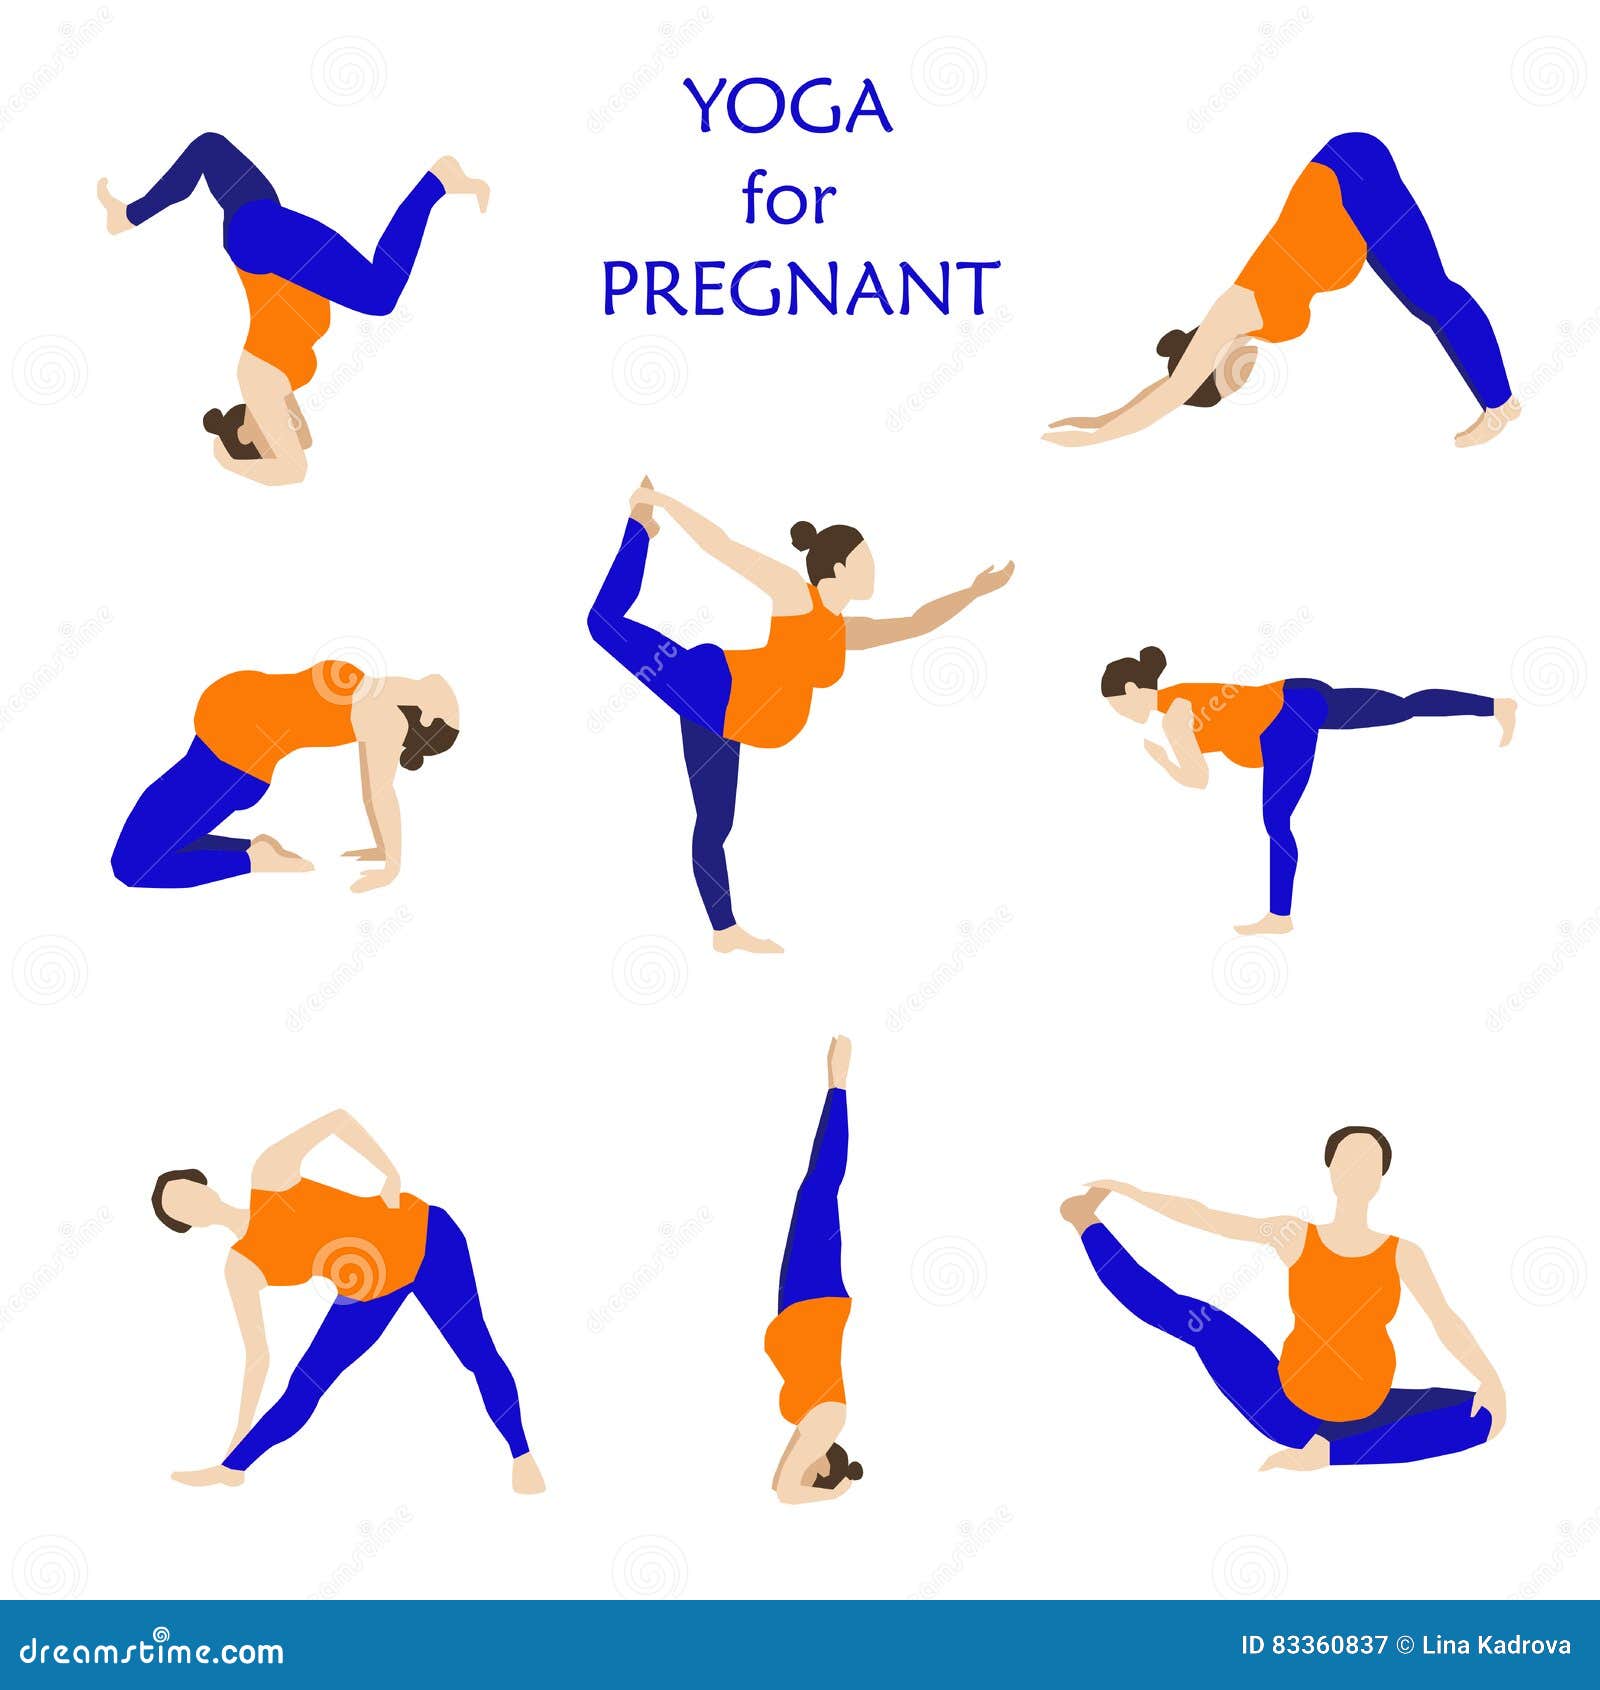 Benefits of yoga for fertility | Chandigarh Ayurved & Panchakarma Centre